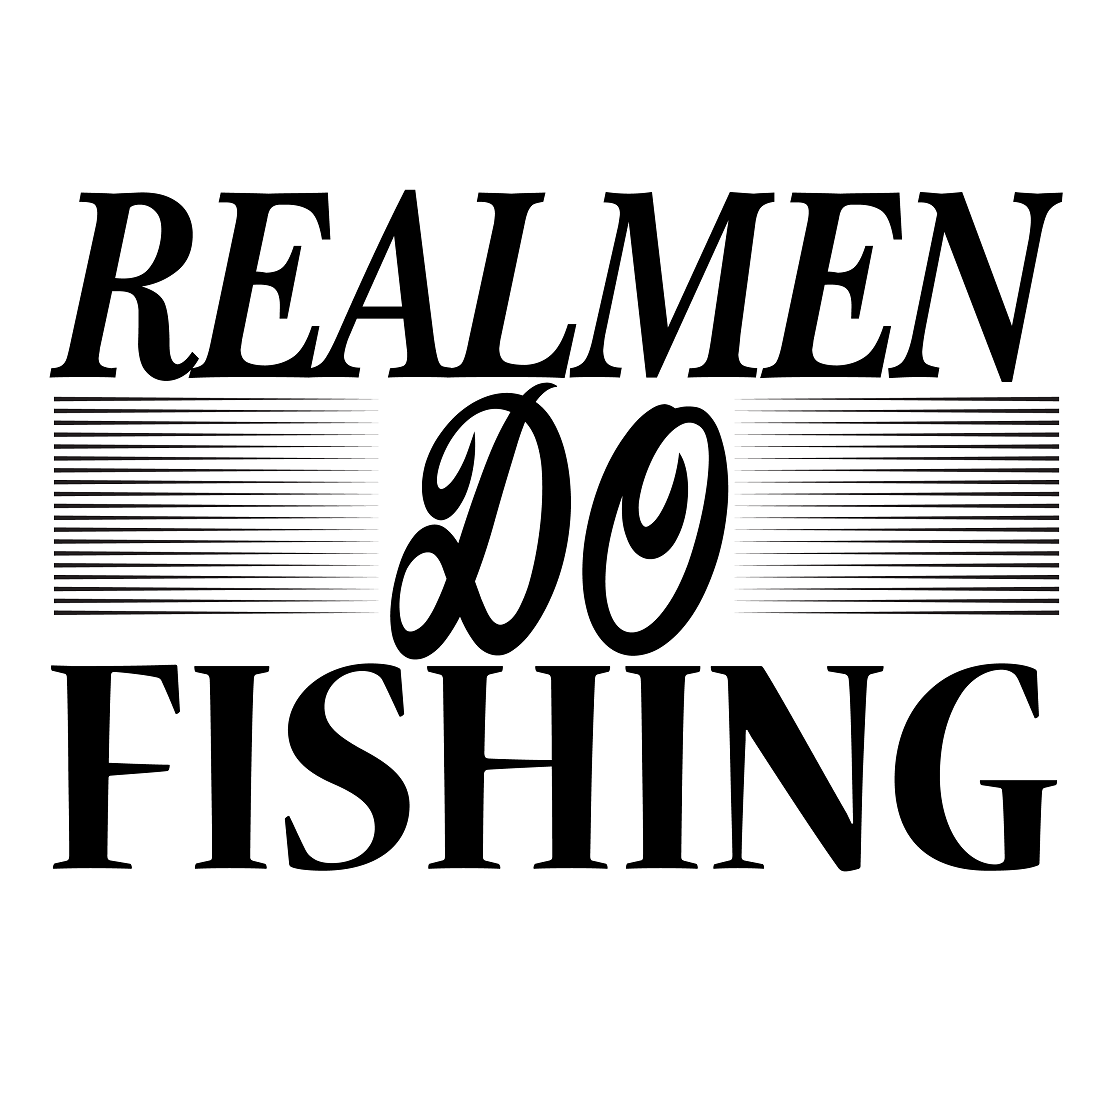 Realmen do fishing preview image.